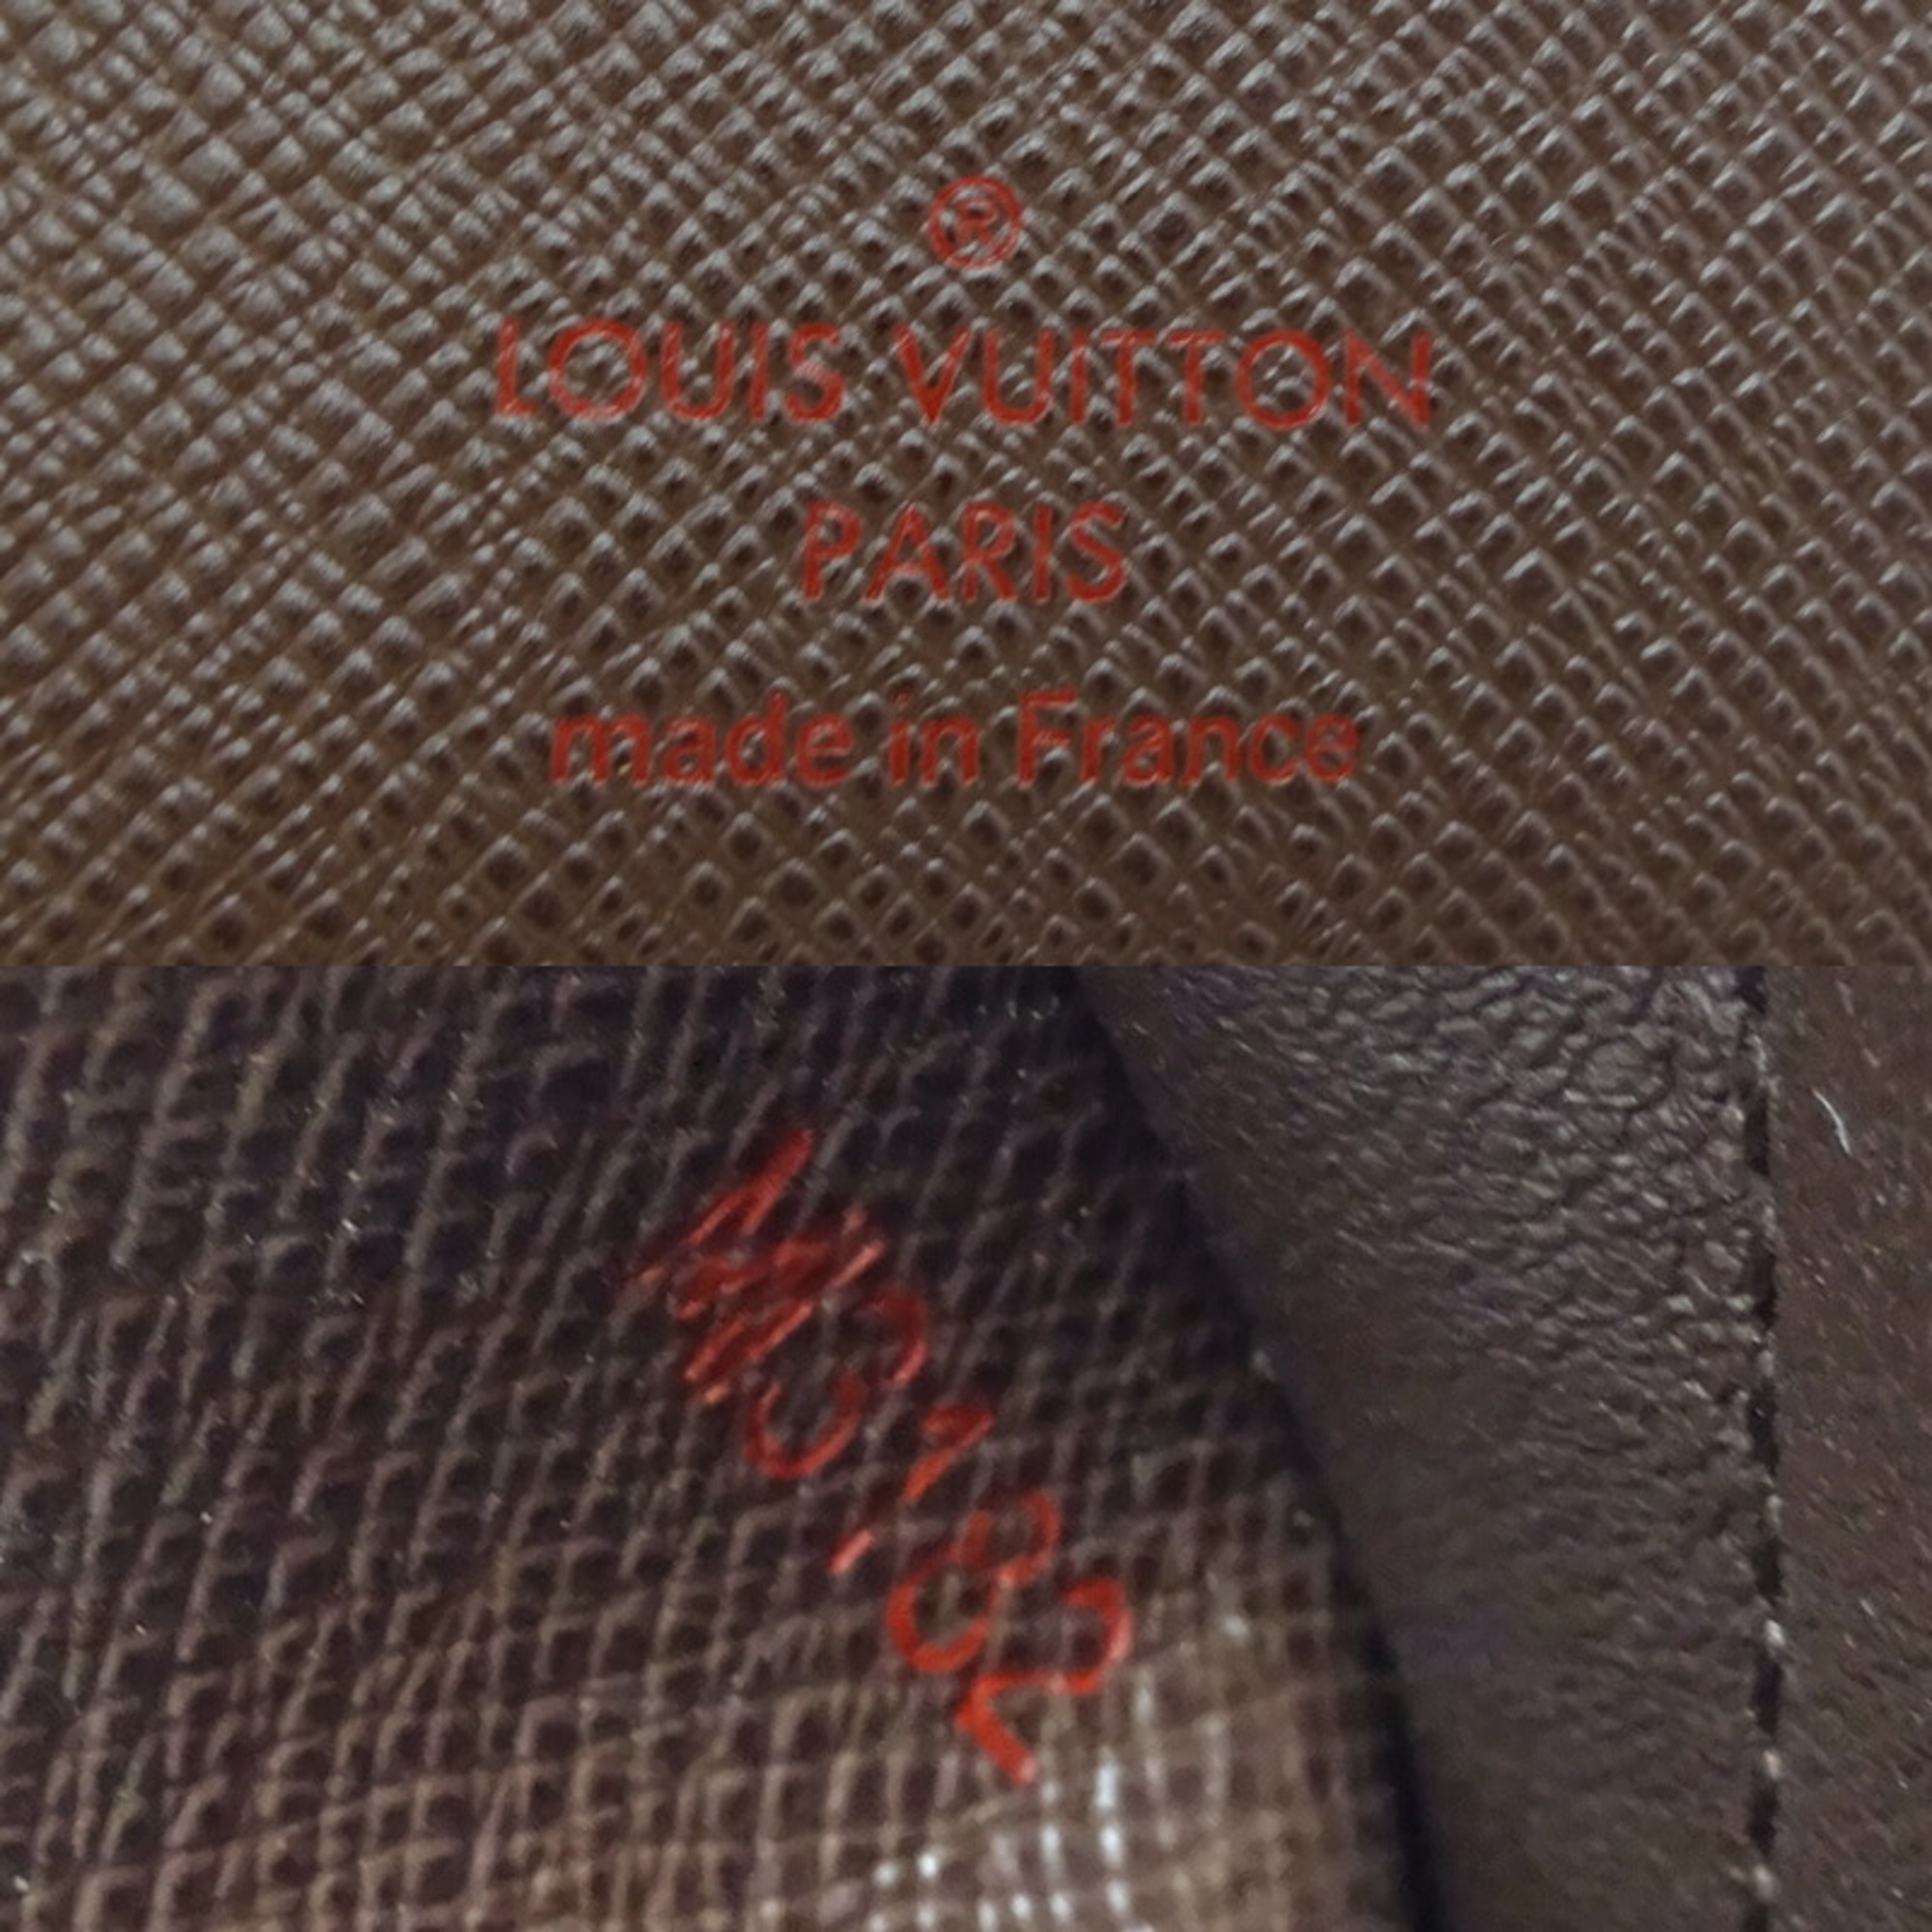 Louis Vuitton wallet, snap button loose, women's bi-fold wallet N61664 Damier Ebene (brown)